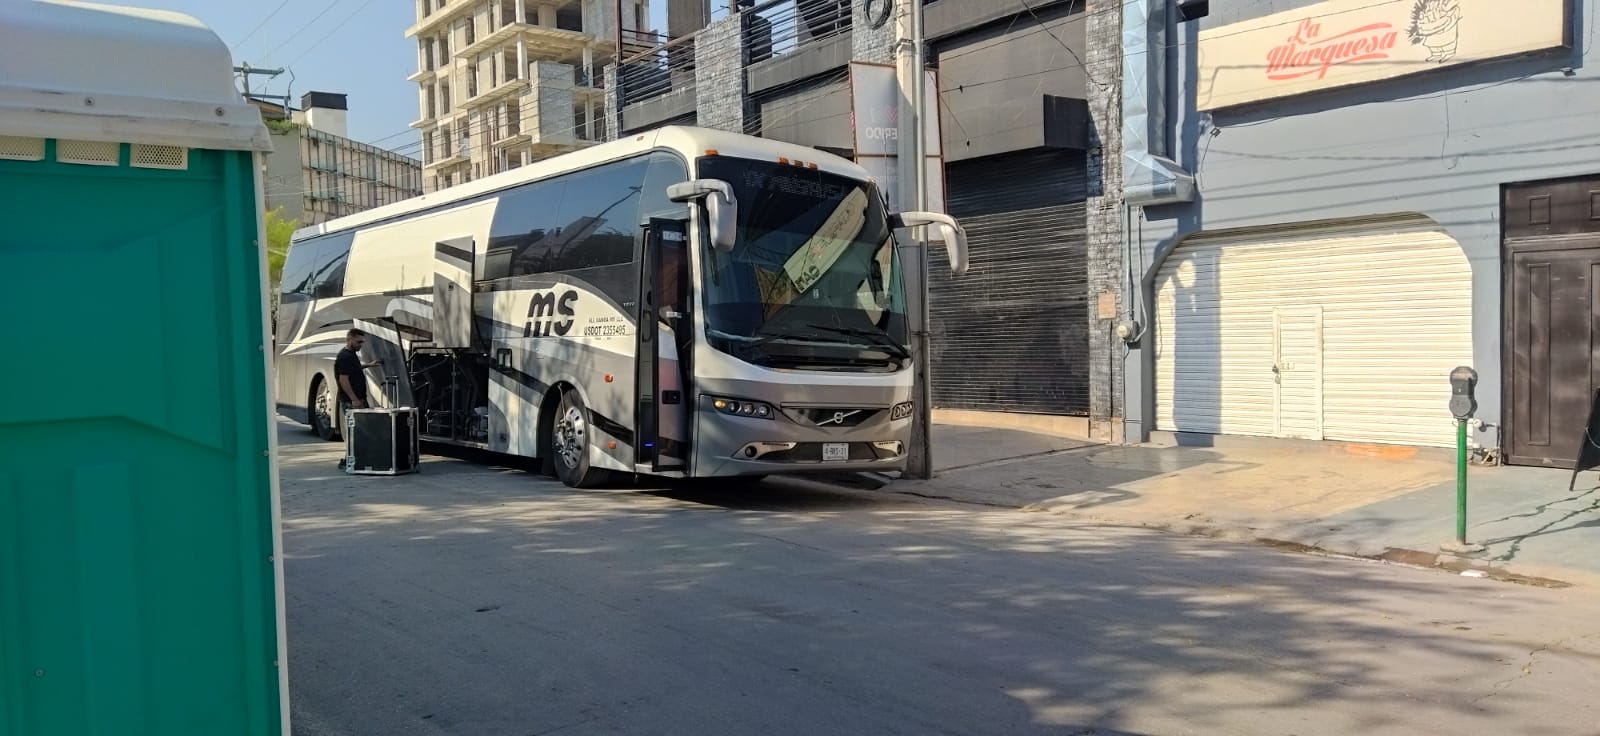 ¡Ya casi! Autobús de la Banda MS causa revuelo en la Plaza Mayor